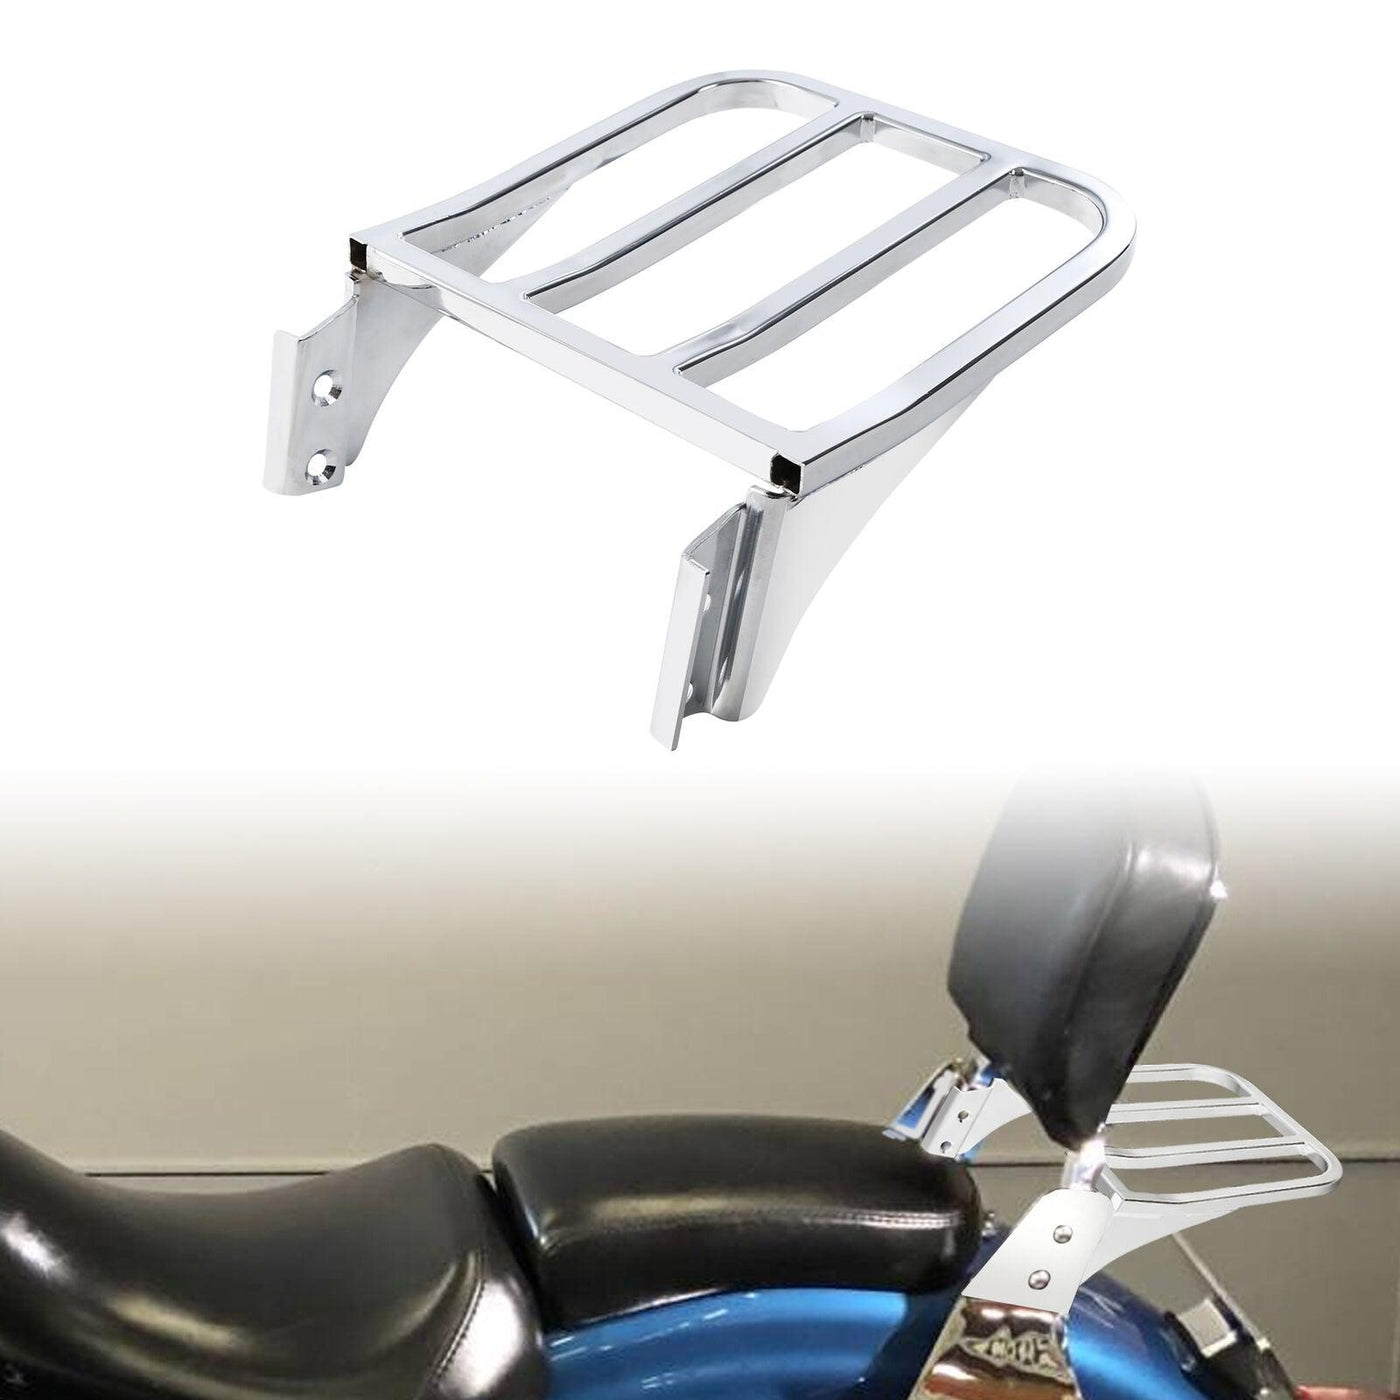 Chrome Rear Sissy Bar Backrest Luggage Rack For Harley Dyna Street Bob FXDB FLST - Moto Life Products